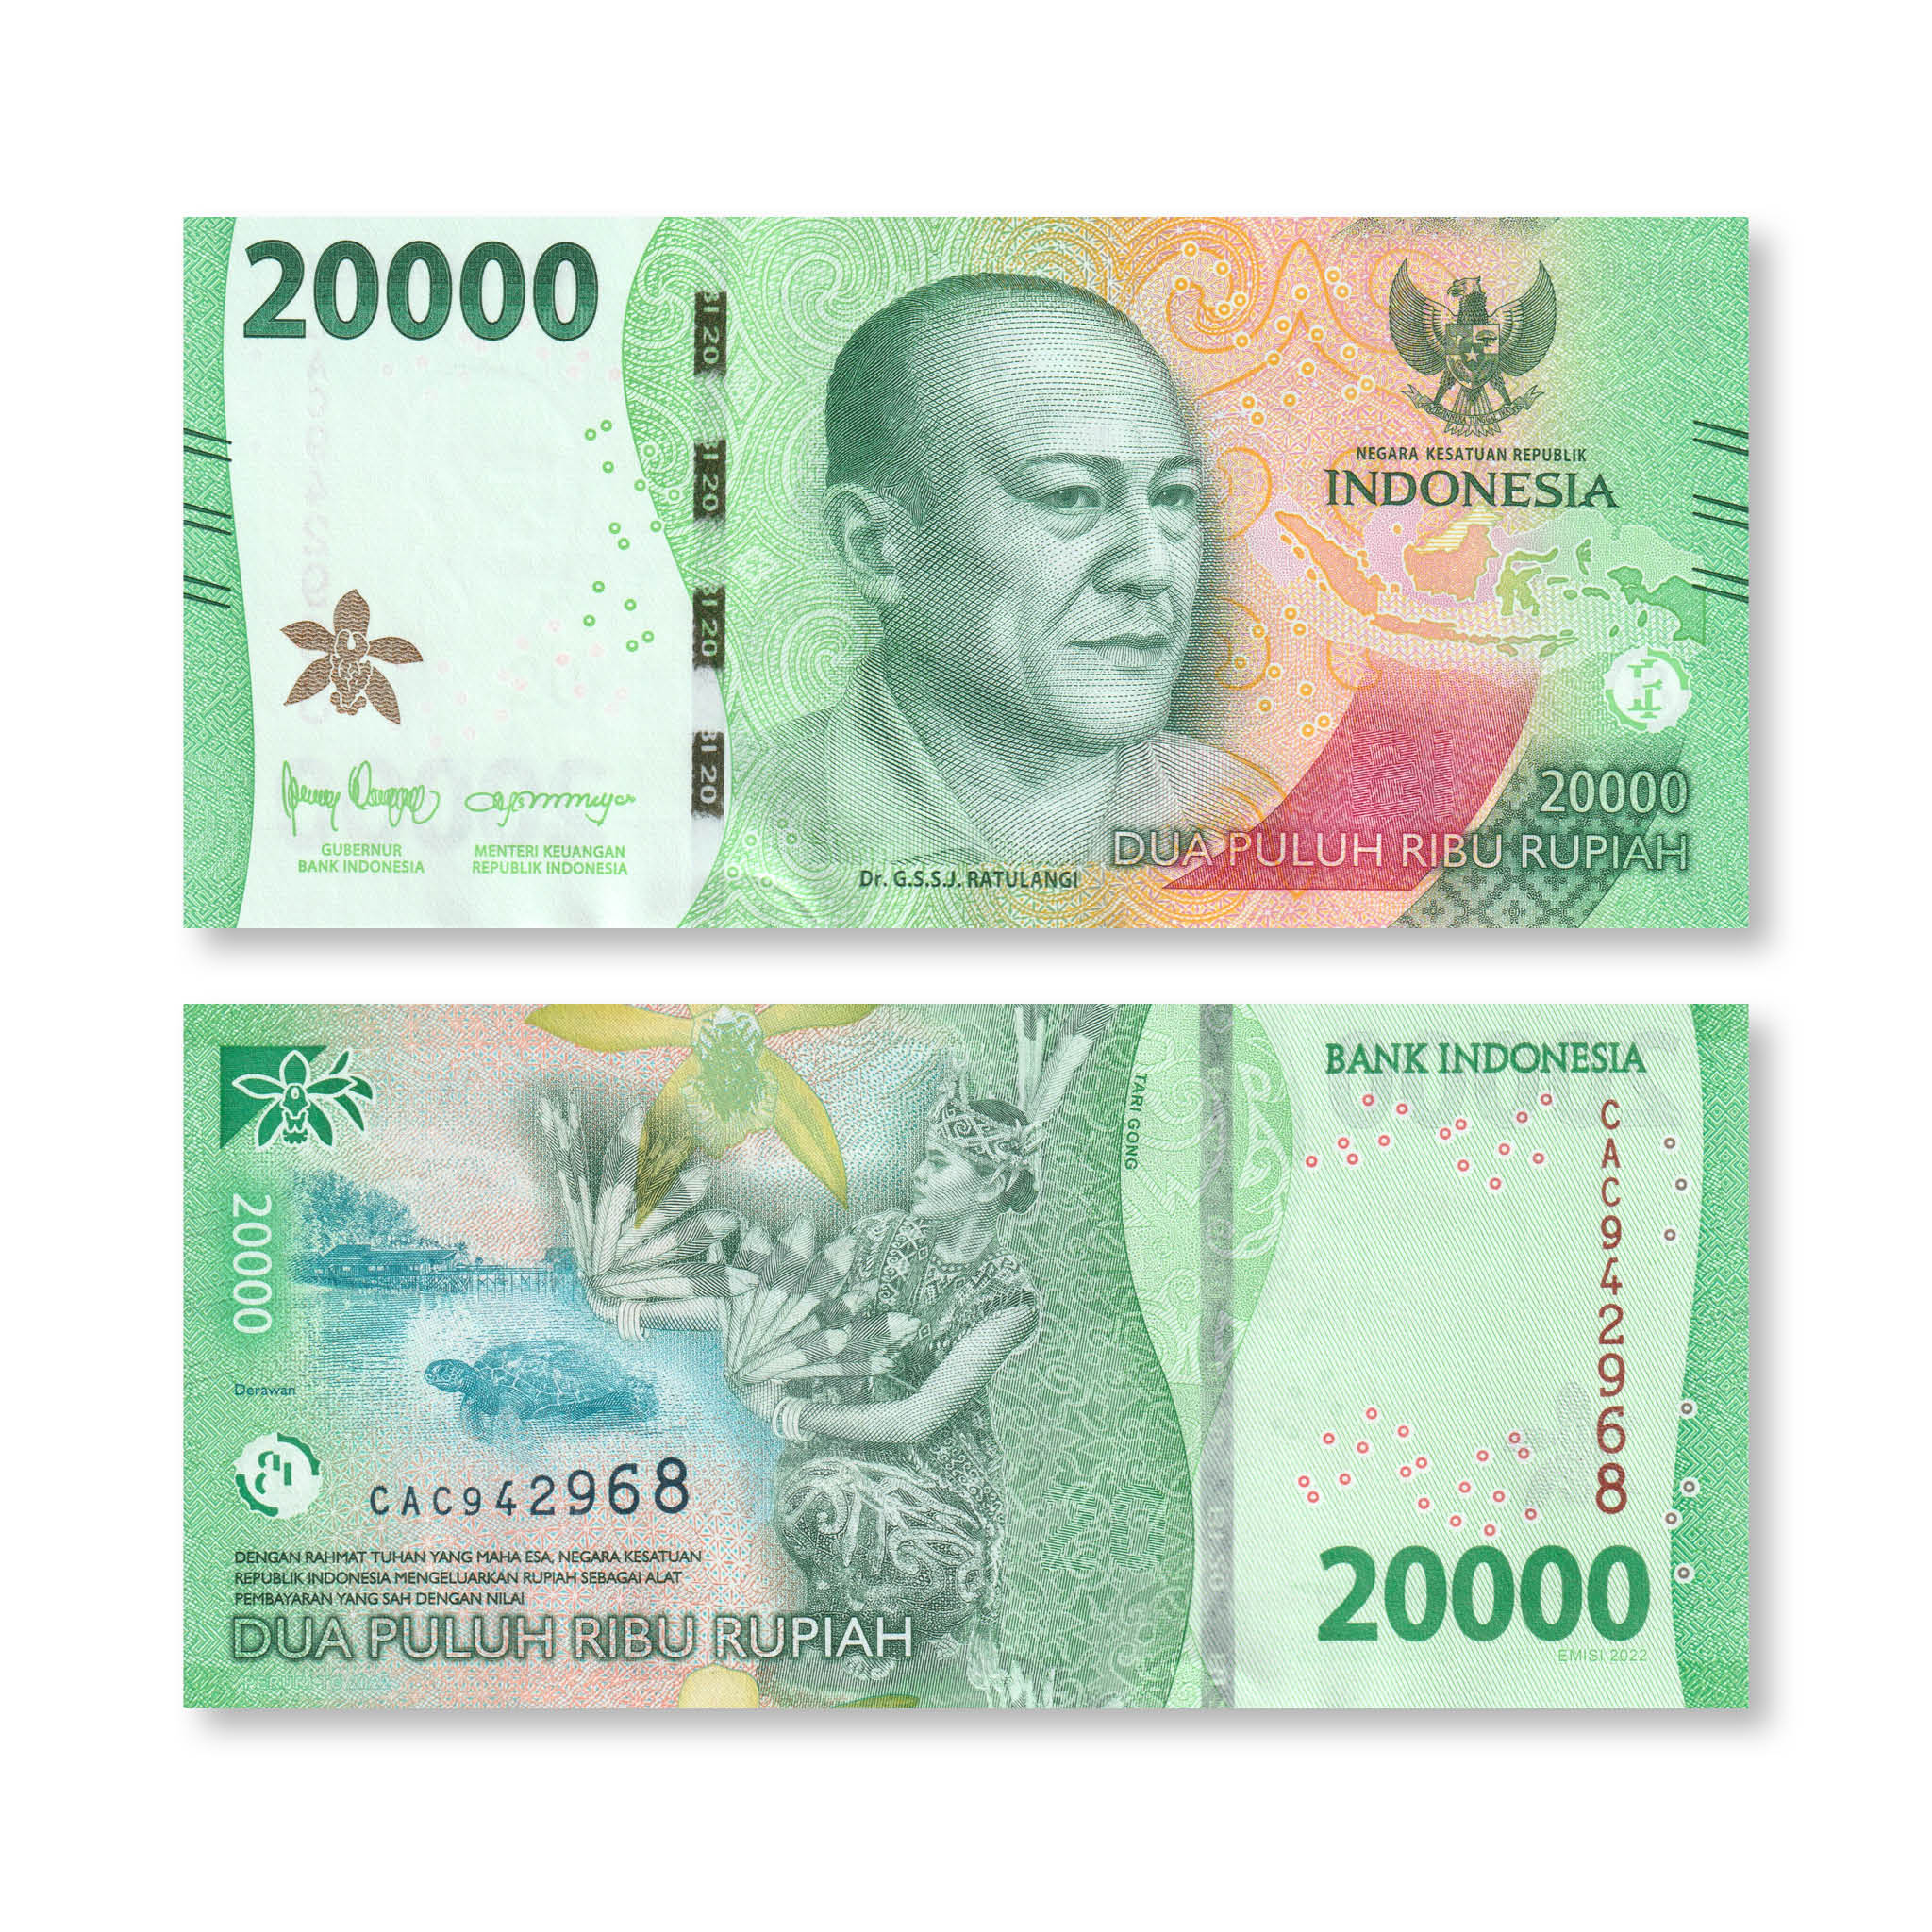 Indonesia 20000 Rupiah, 2022, B621a, UNC - Robert's World Money - World Banknotes